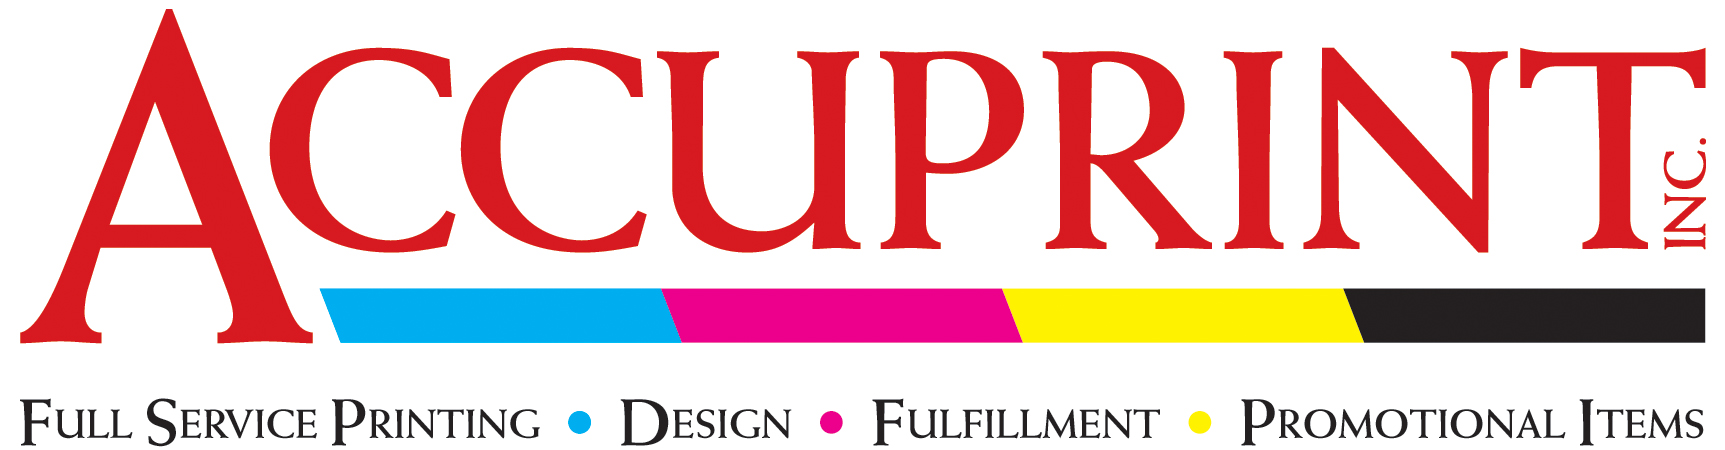 Accuprint, Inc.'s Logo